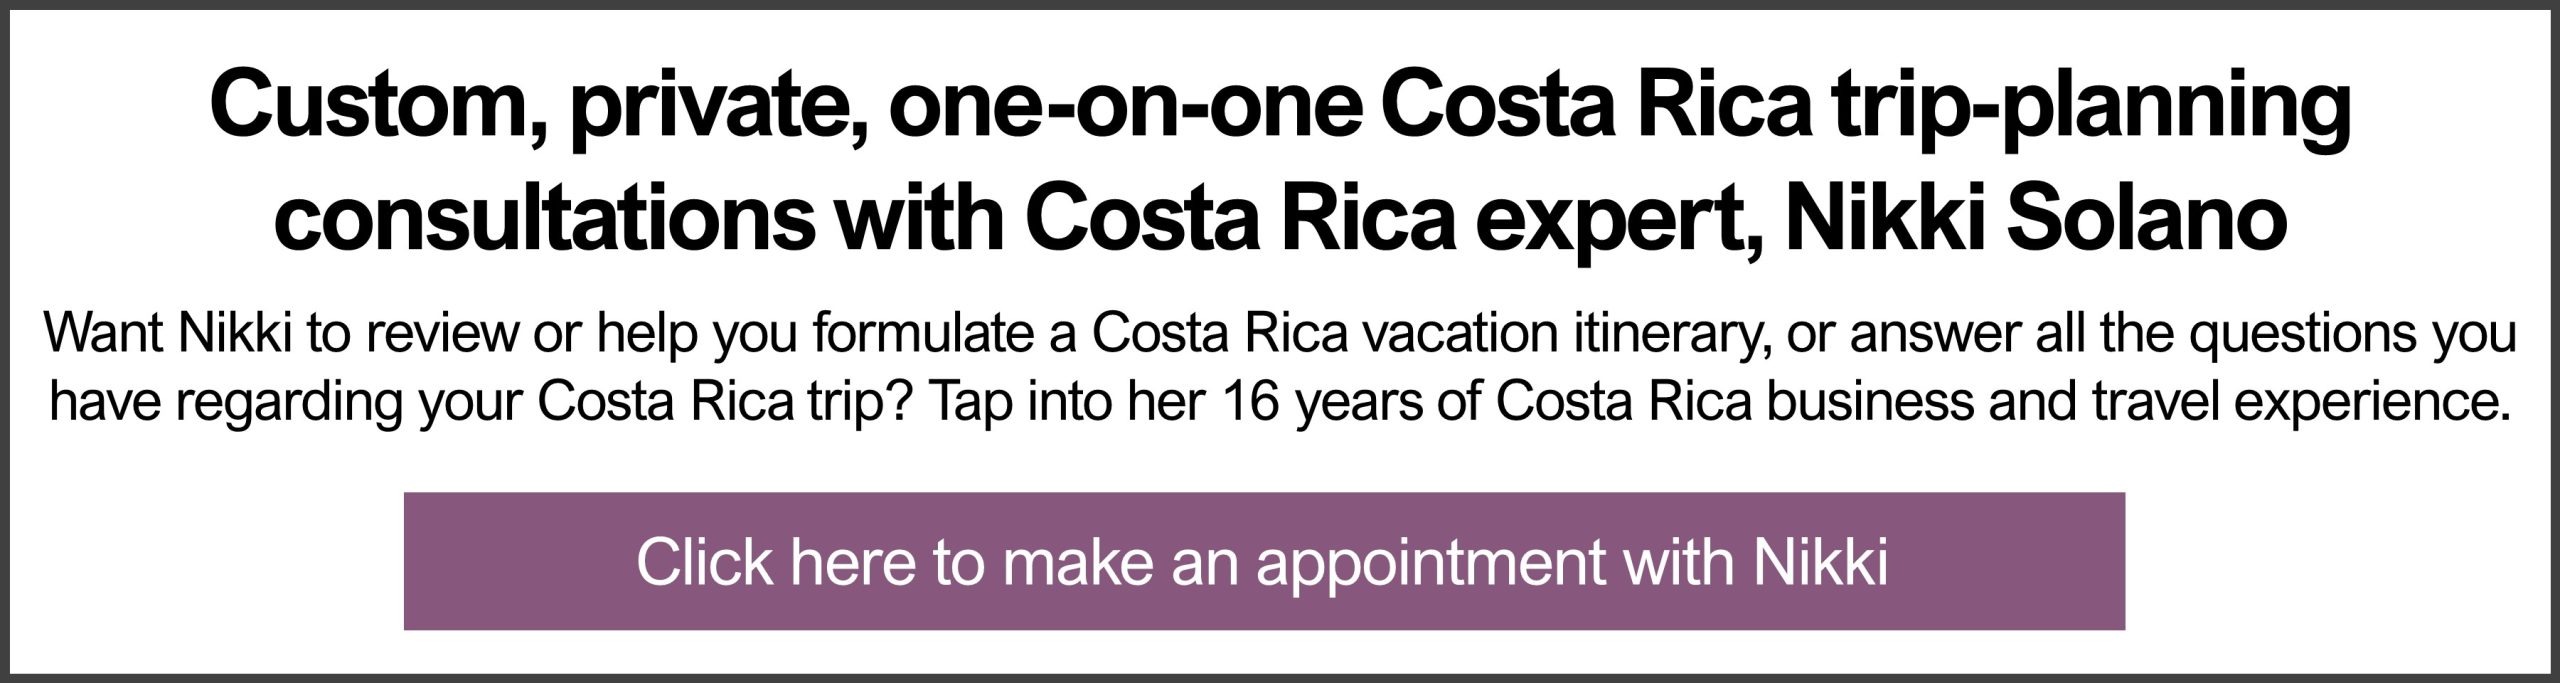 Costa Rica Travel Consulting Nikki Solano